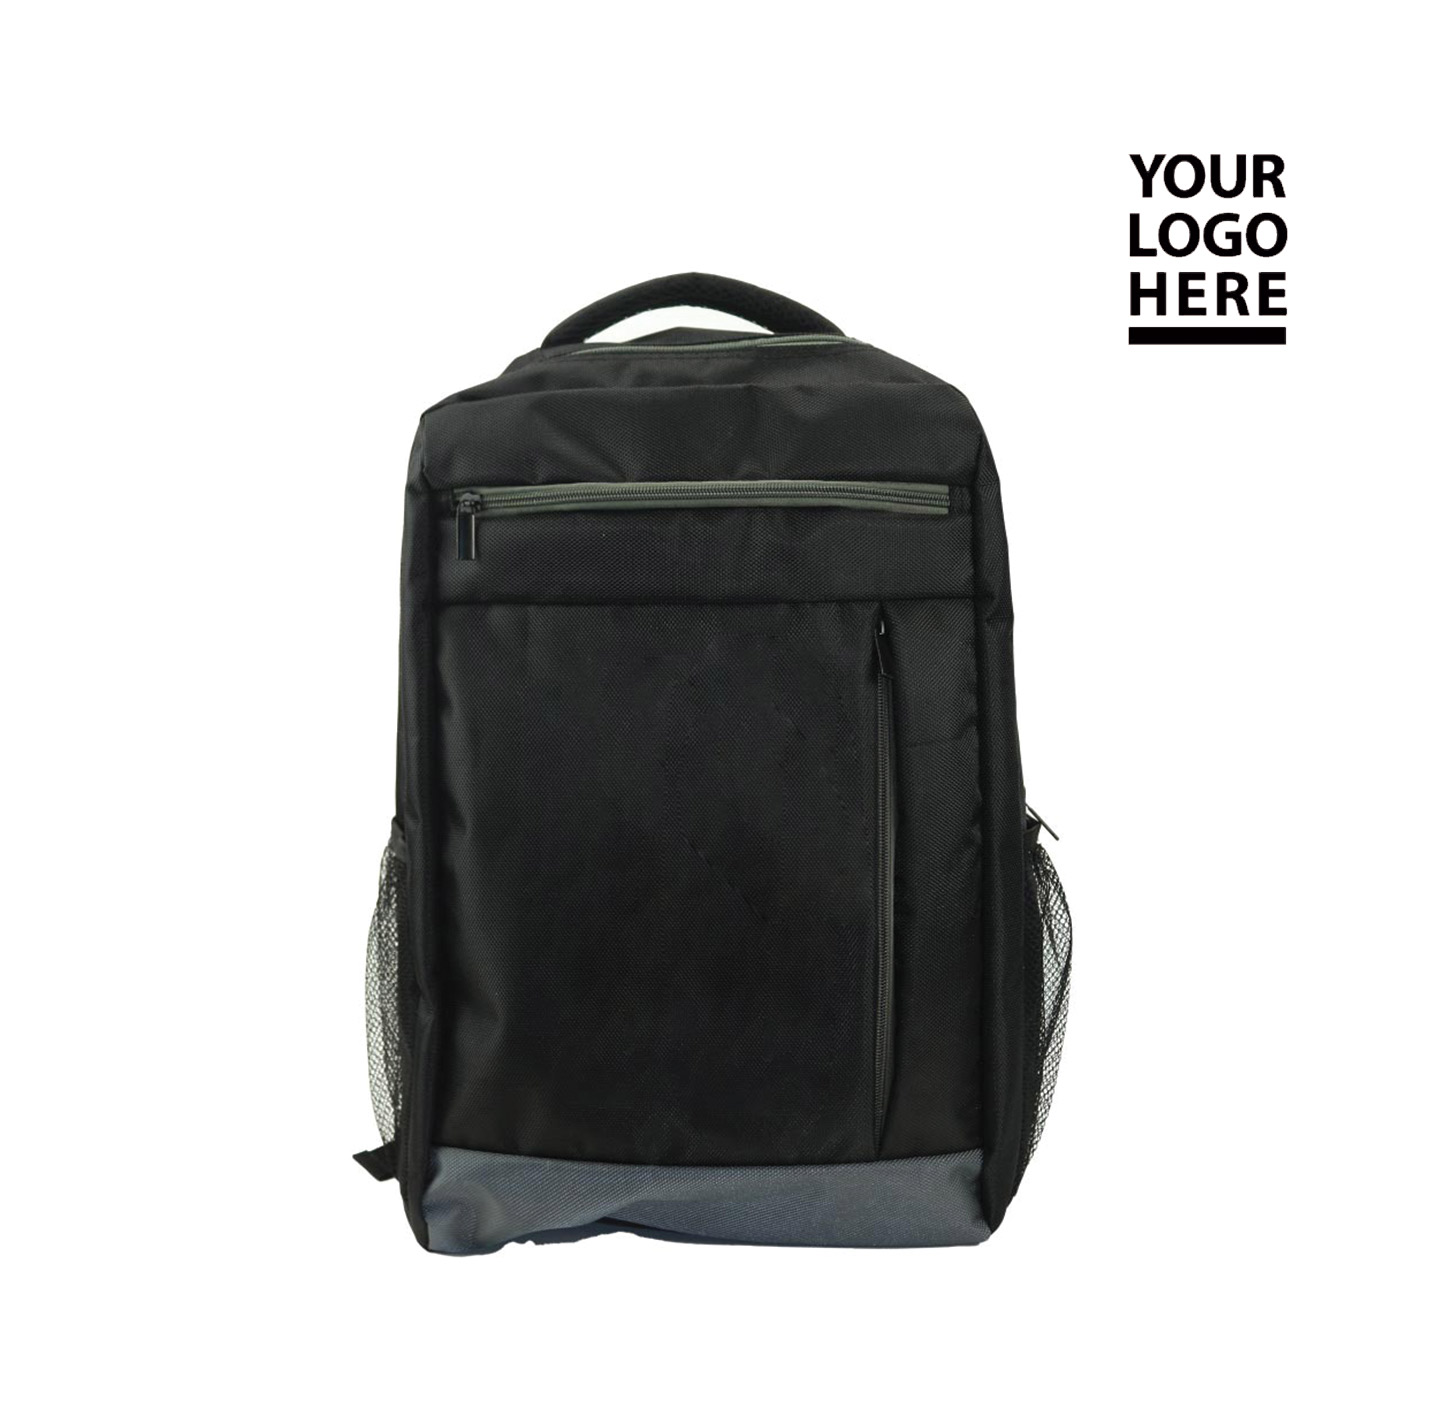 Backpacks in Black 1680D Polyester Material